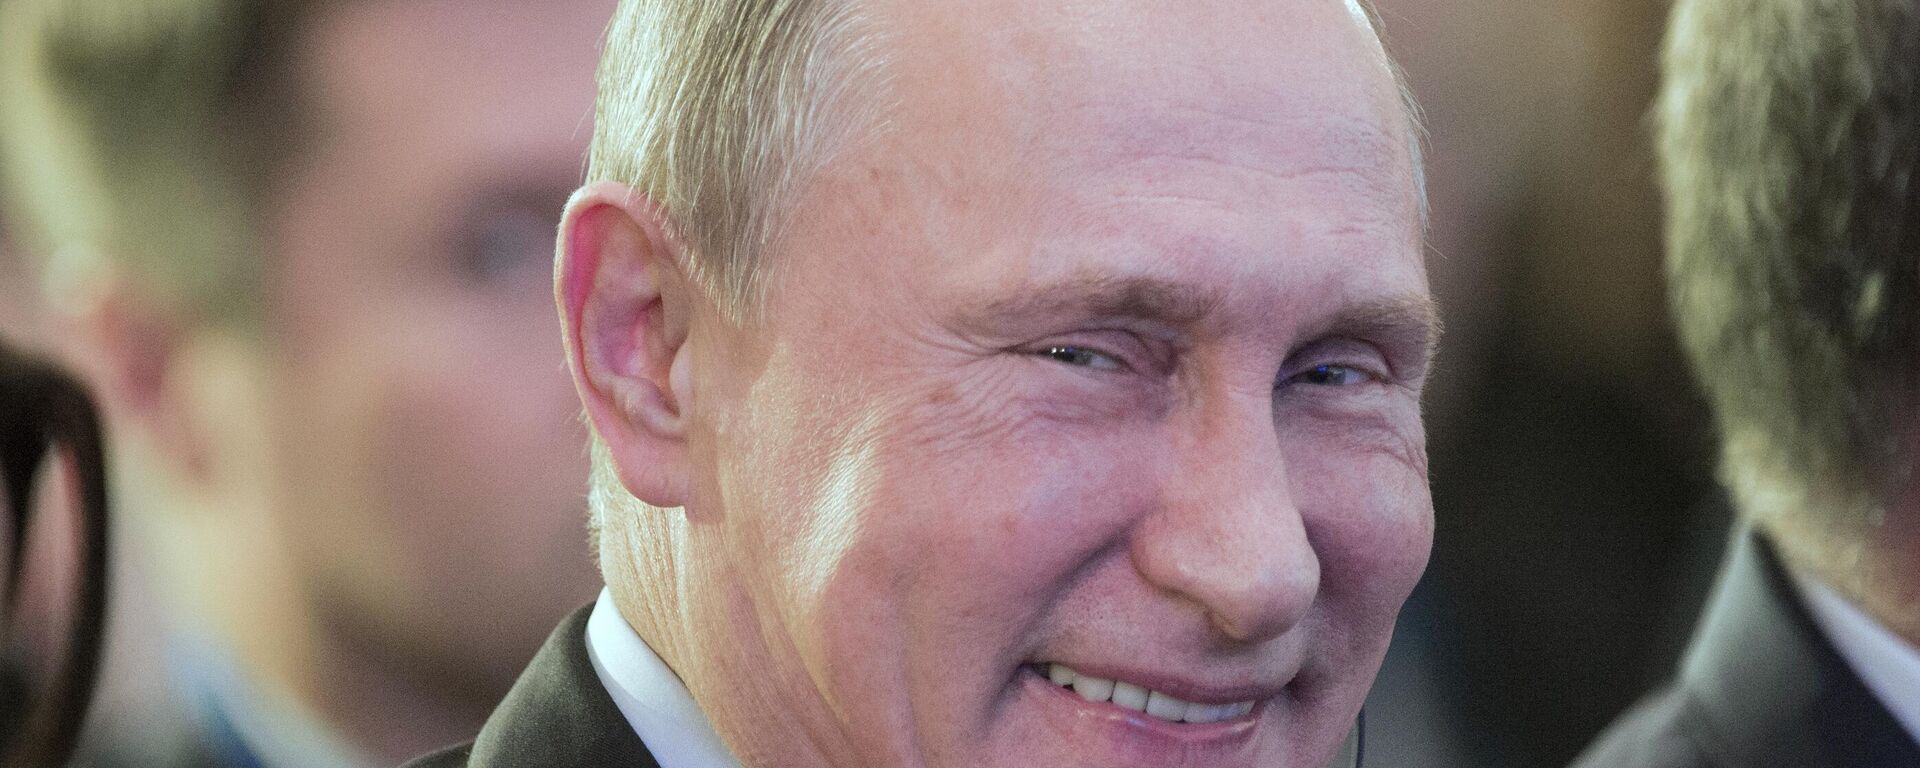 Vladímir Putin, presidente de Rusia - Sputnik Mundo, 1920, 07.10.2021